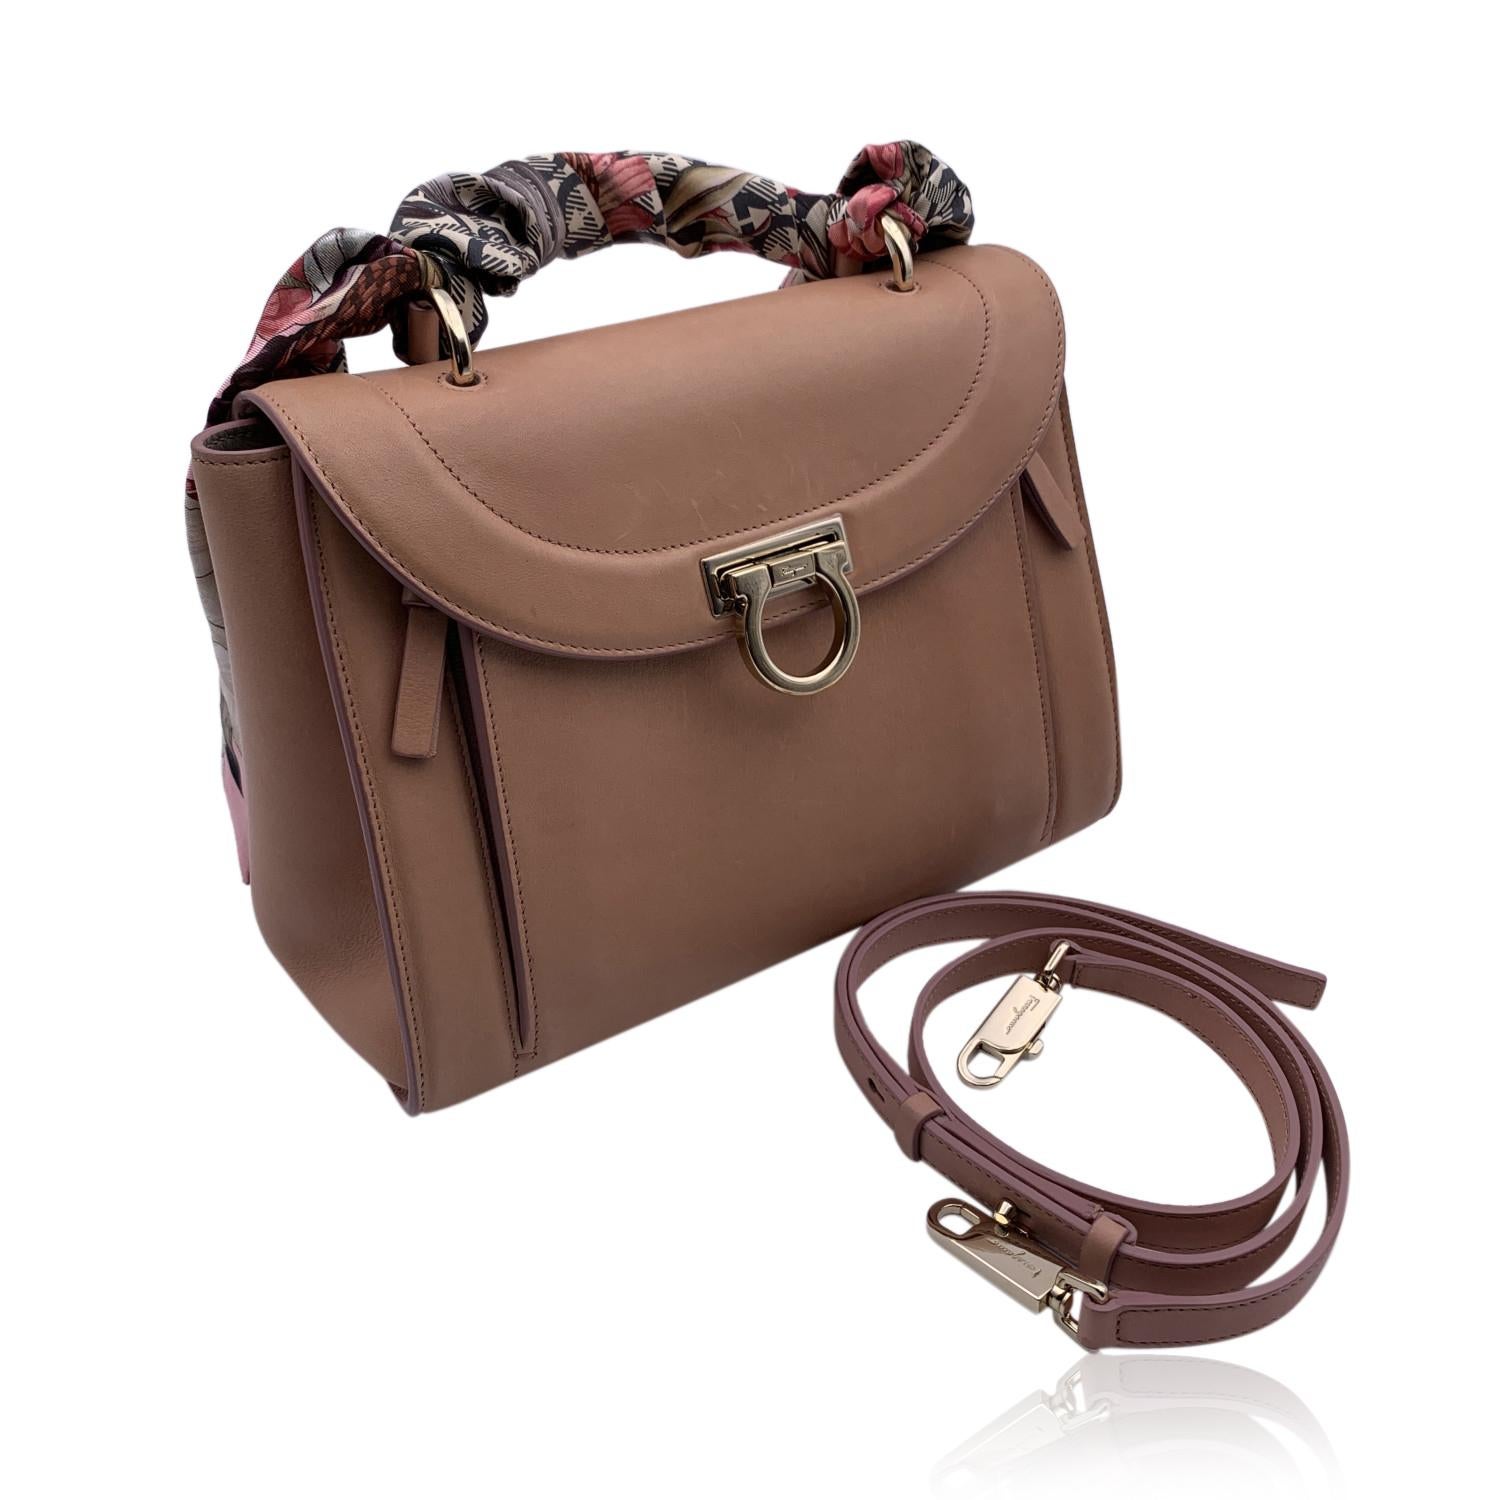 Salvatore Ferragamo Pink Leather Sofia Satchel Bag Handbag 6